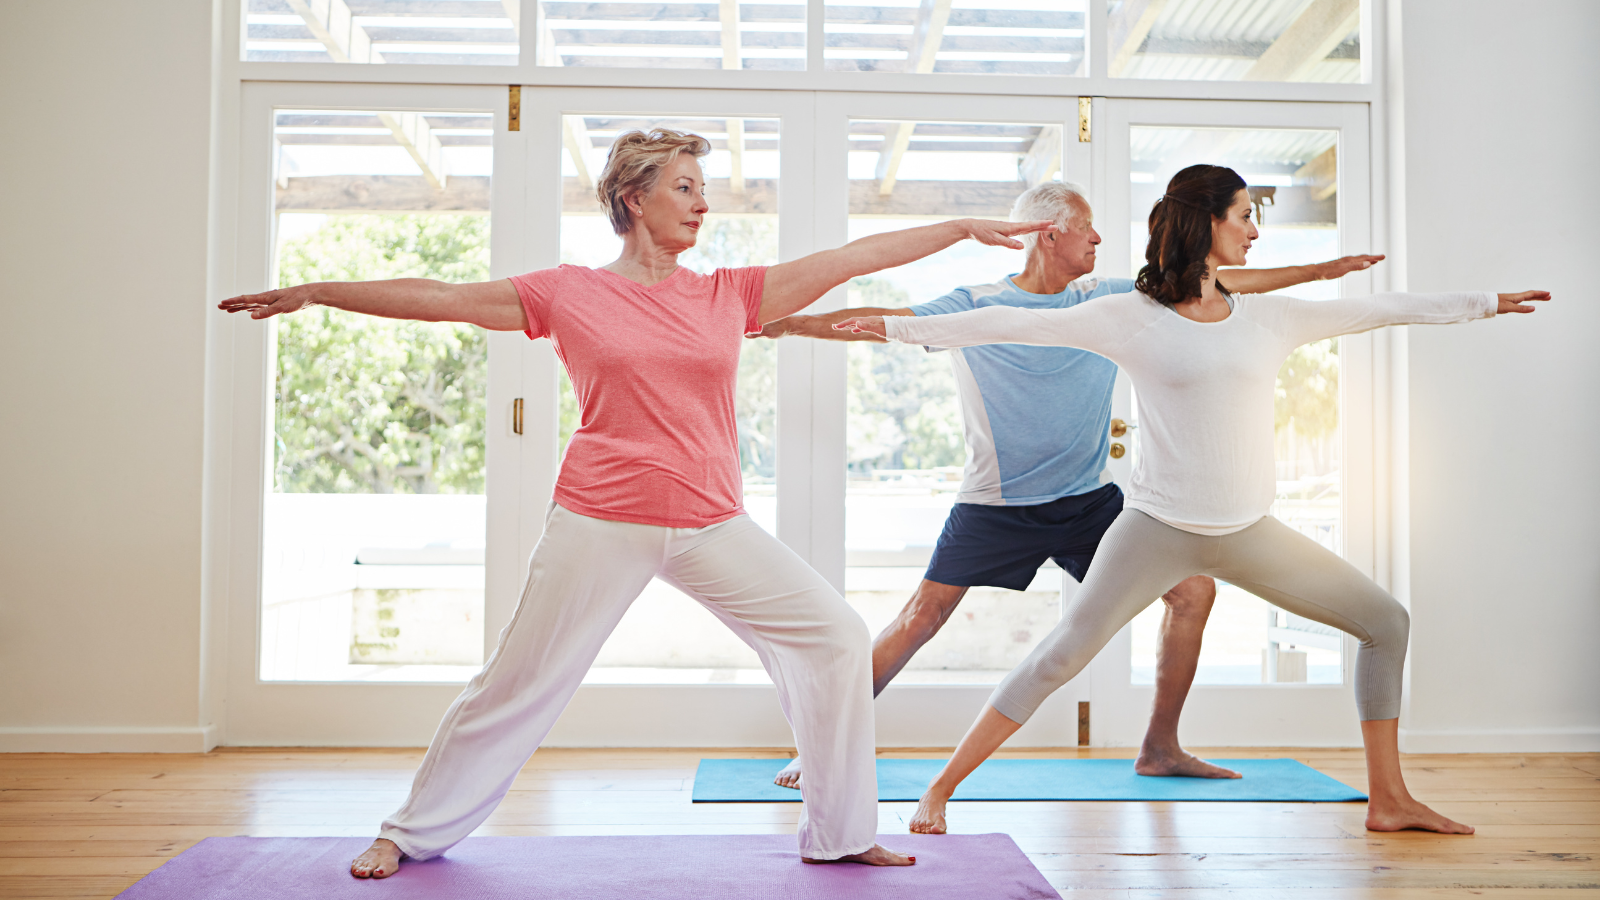 Healthy ageing in retirement communities